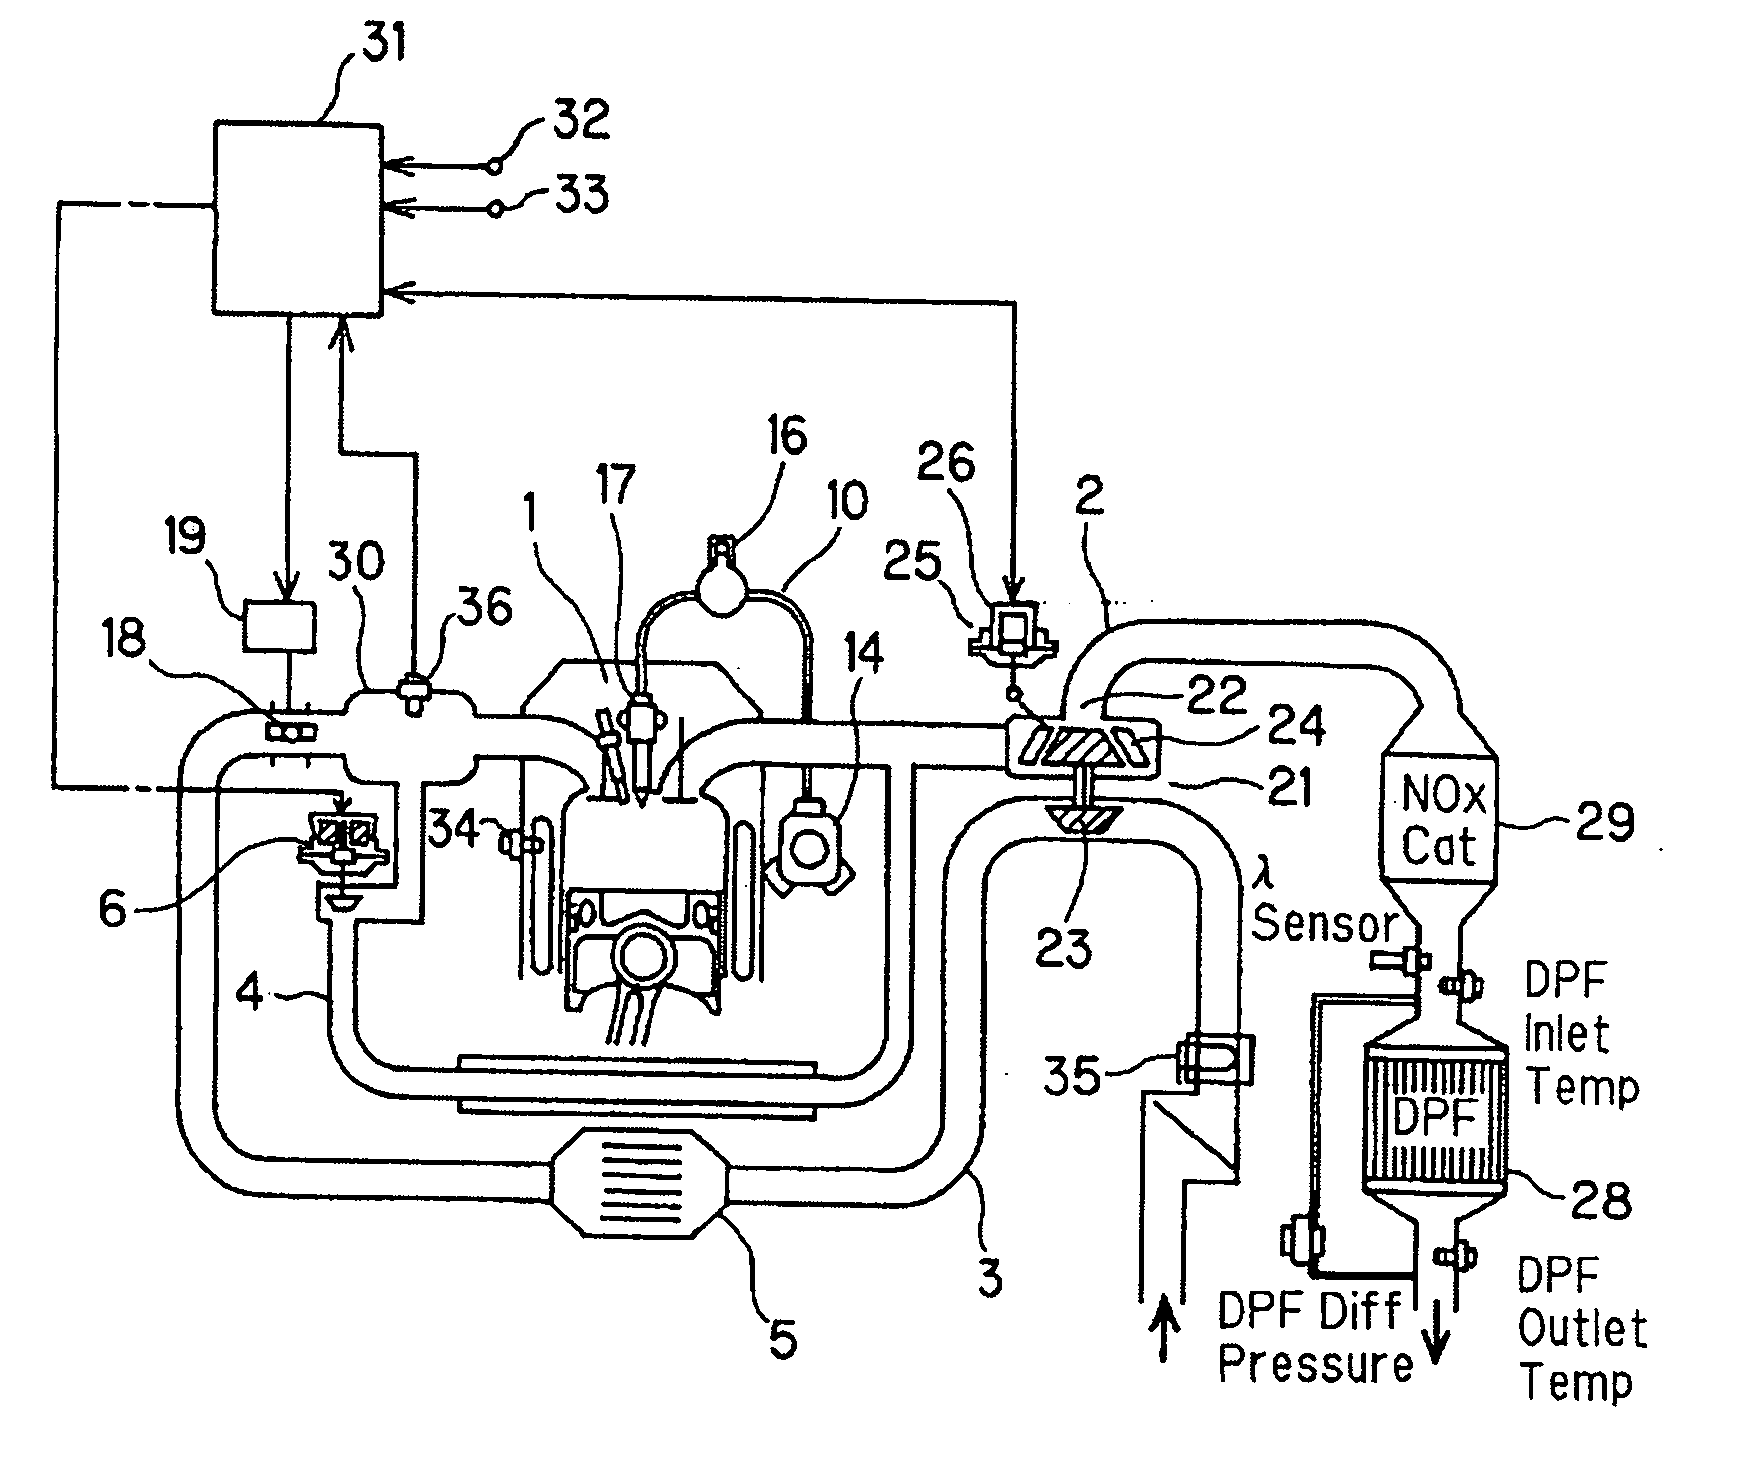 Engine control apparatus